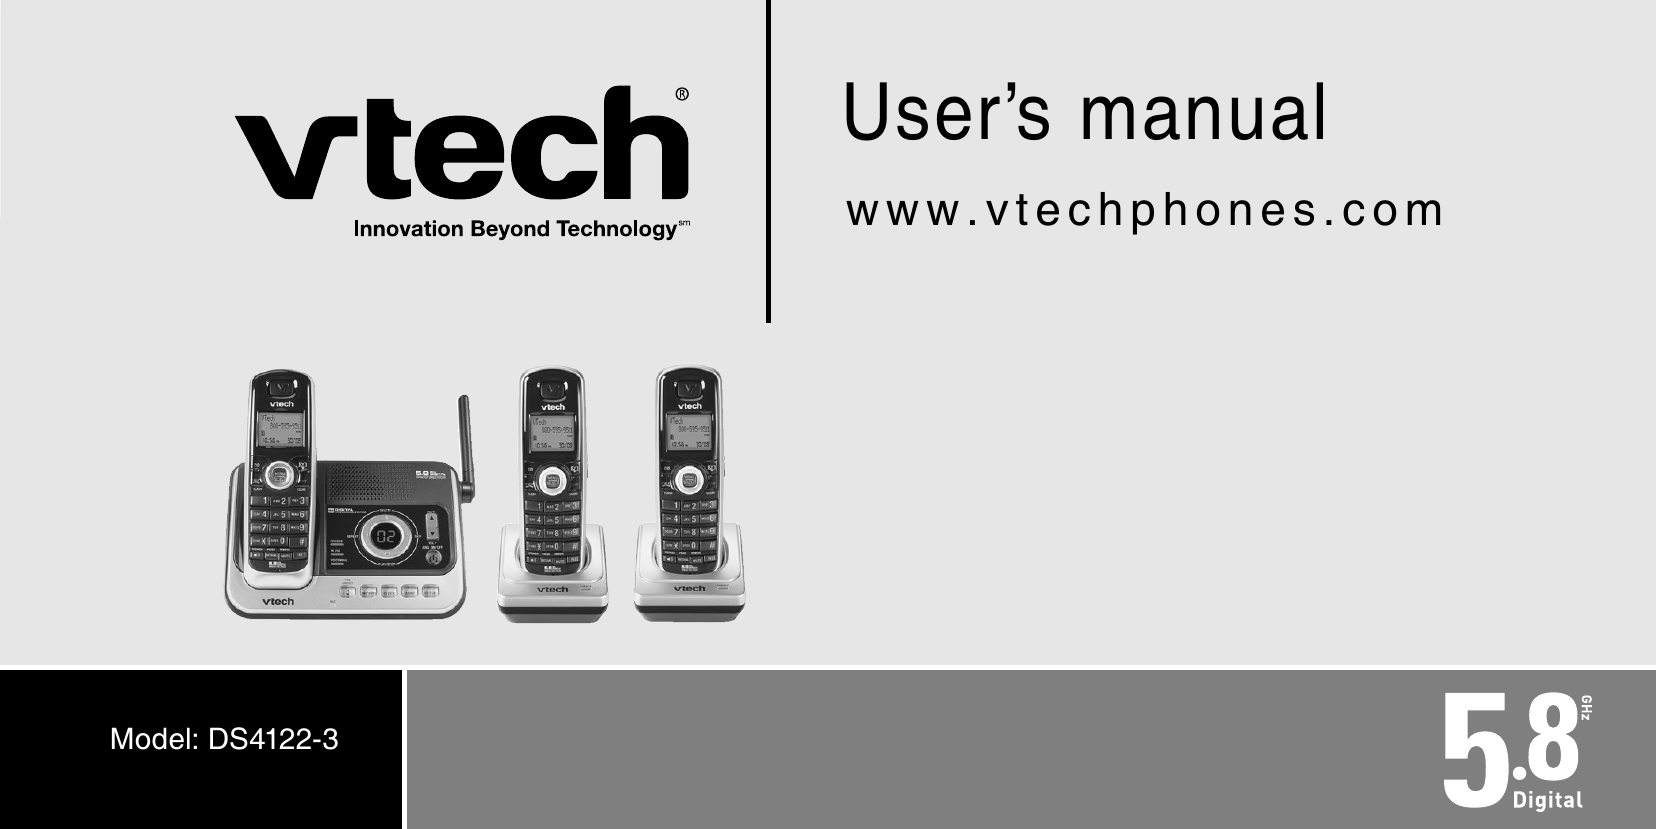 User’s manualwww.vtechphones.comModel: DS4122-3